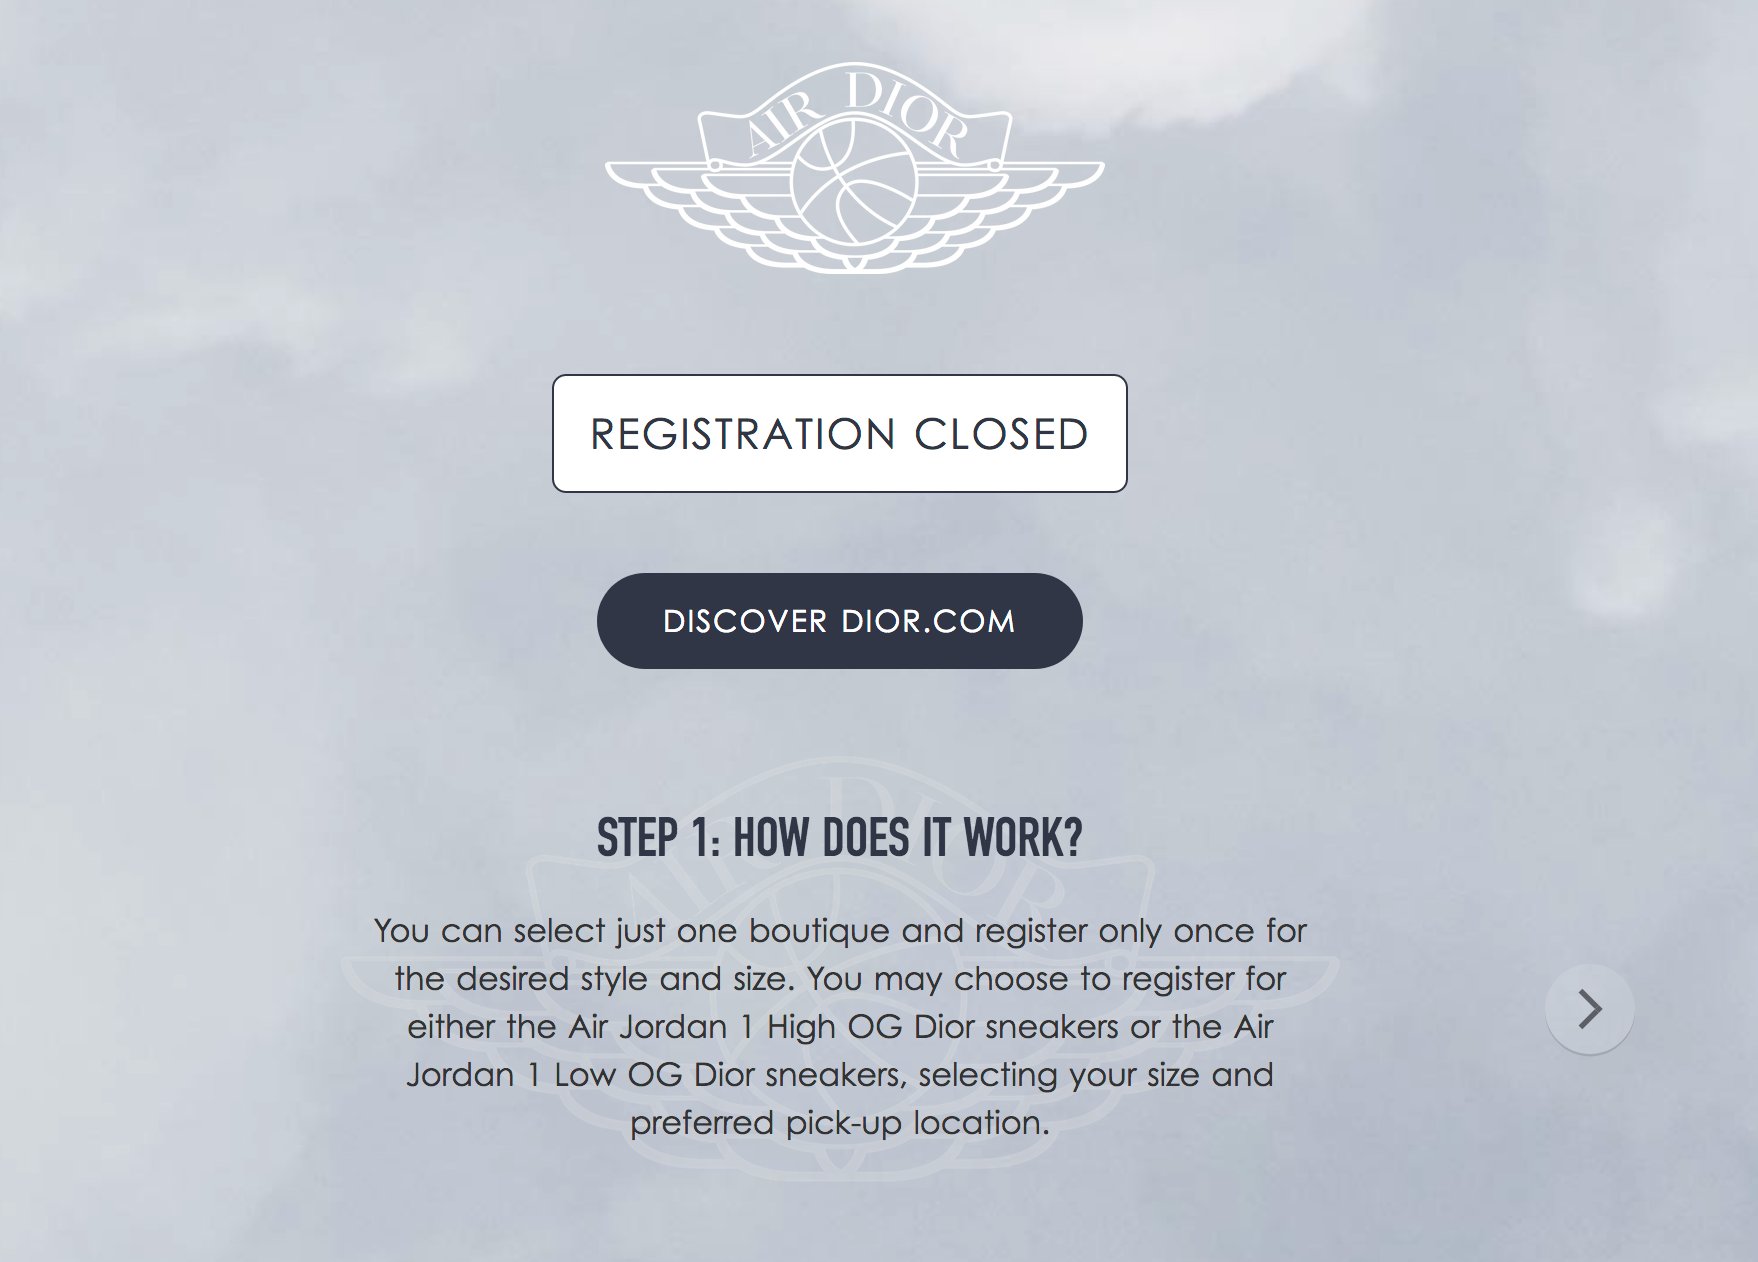 Registration for the Air Jordan 1 Dior 